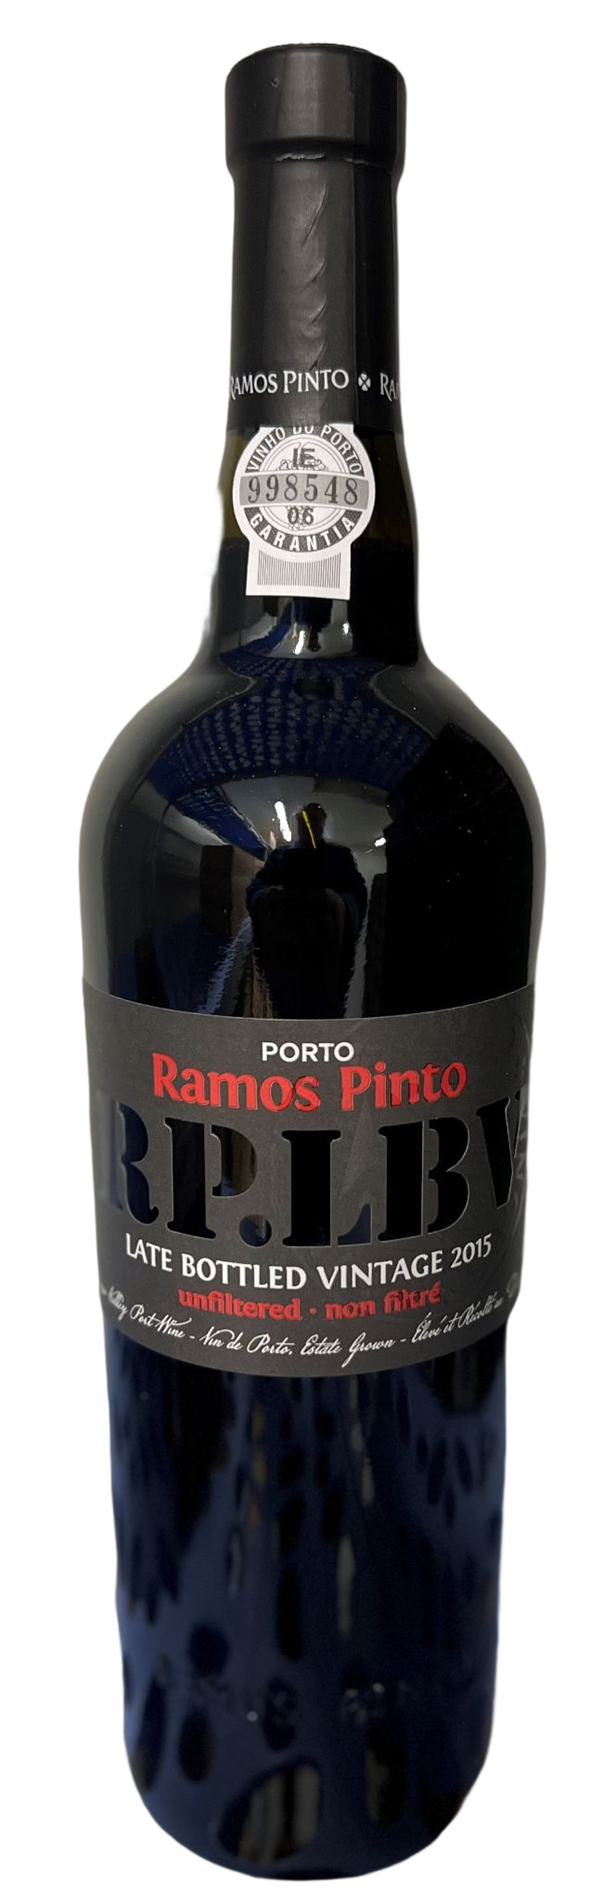 Ramos Pinto LBV 2015